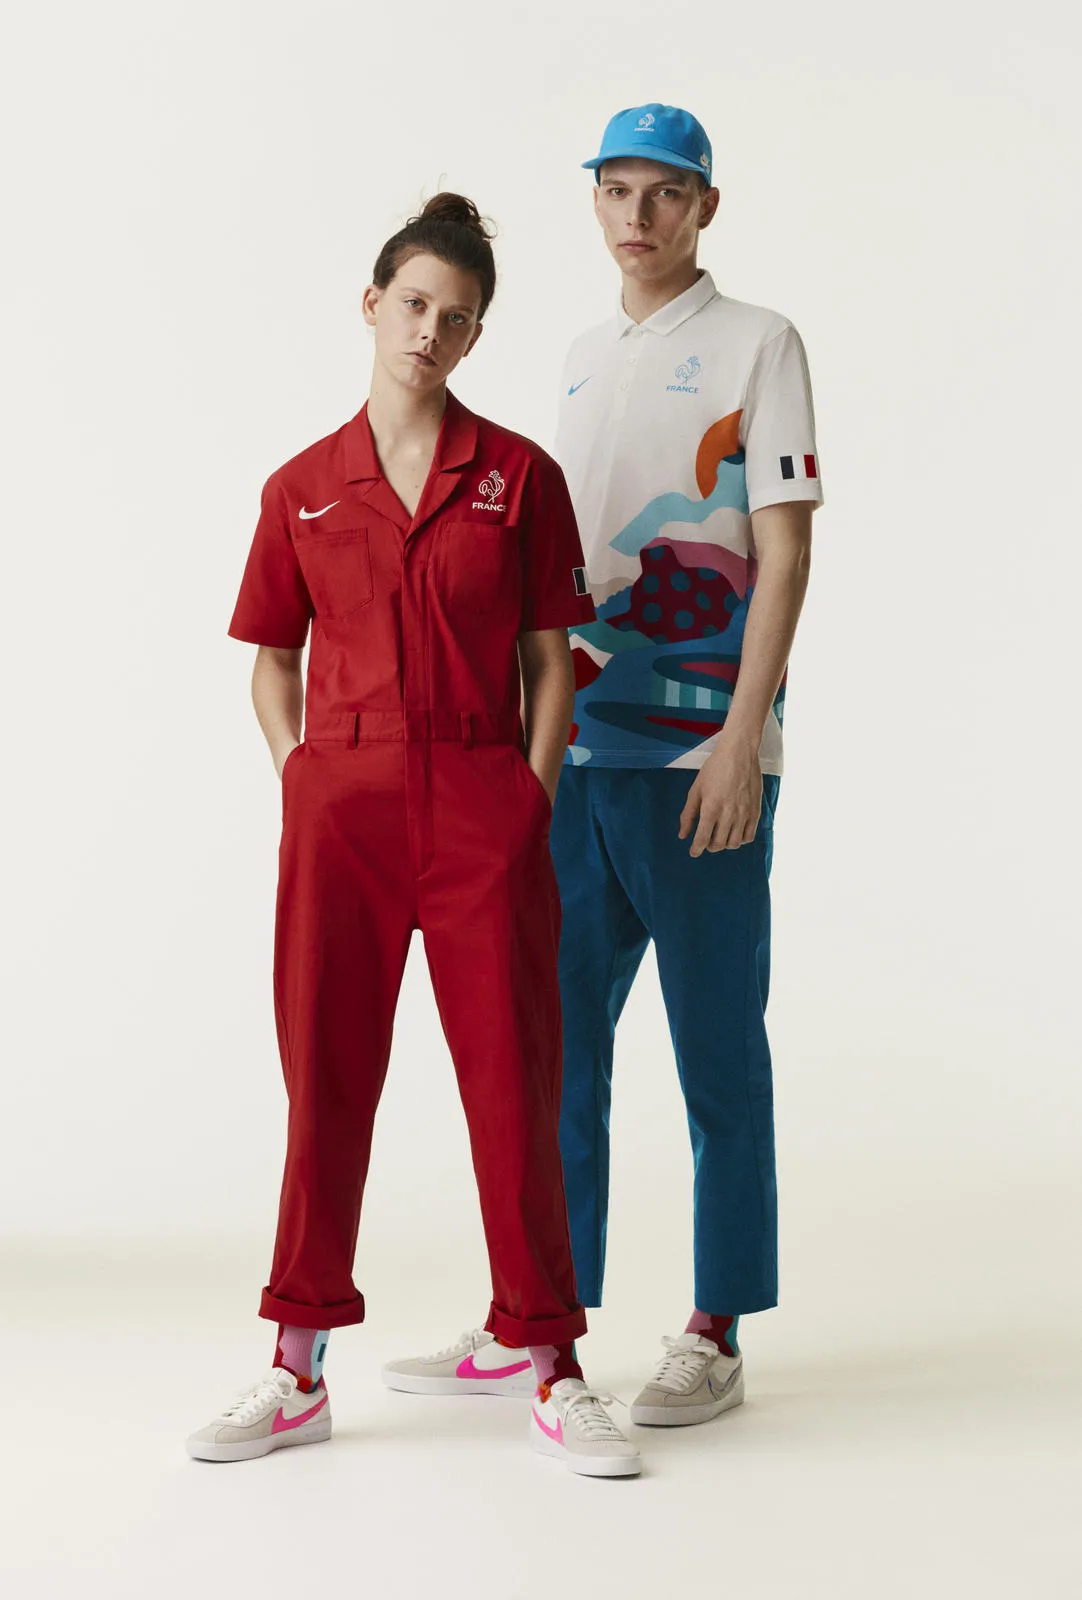 Nike Olympic Uniforms - Yenra